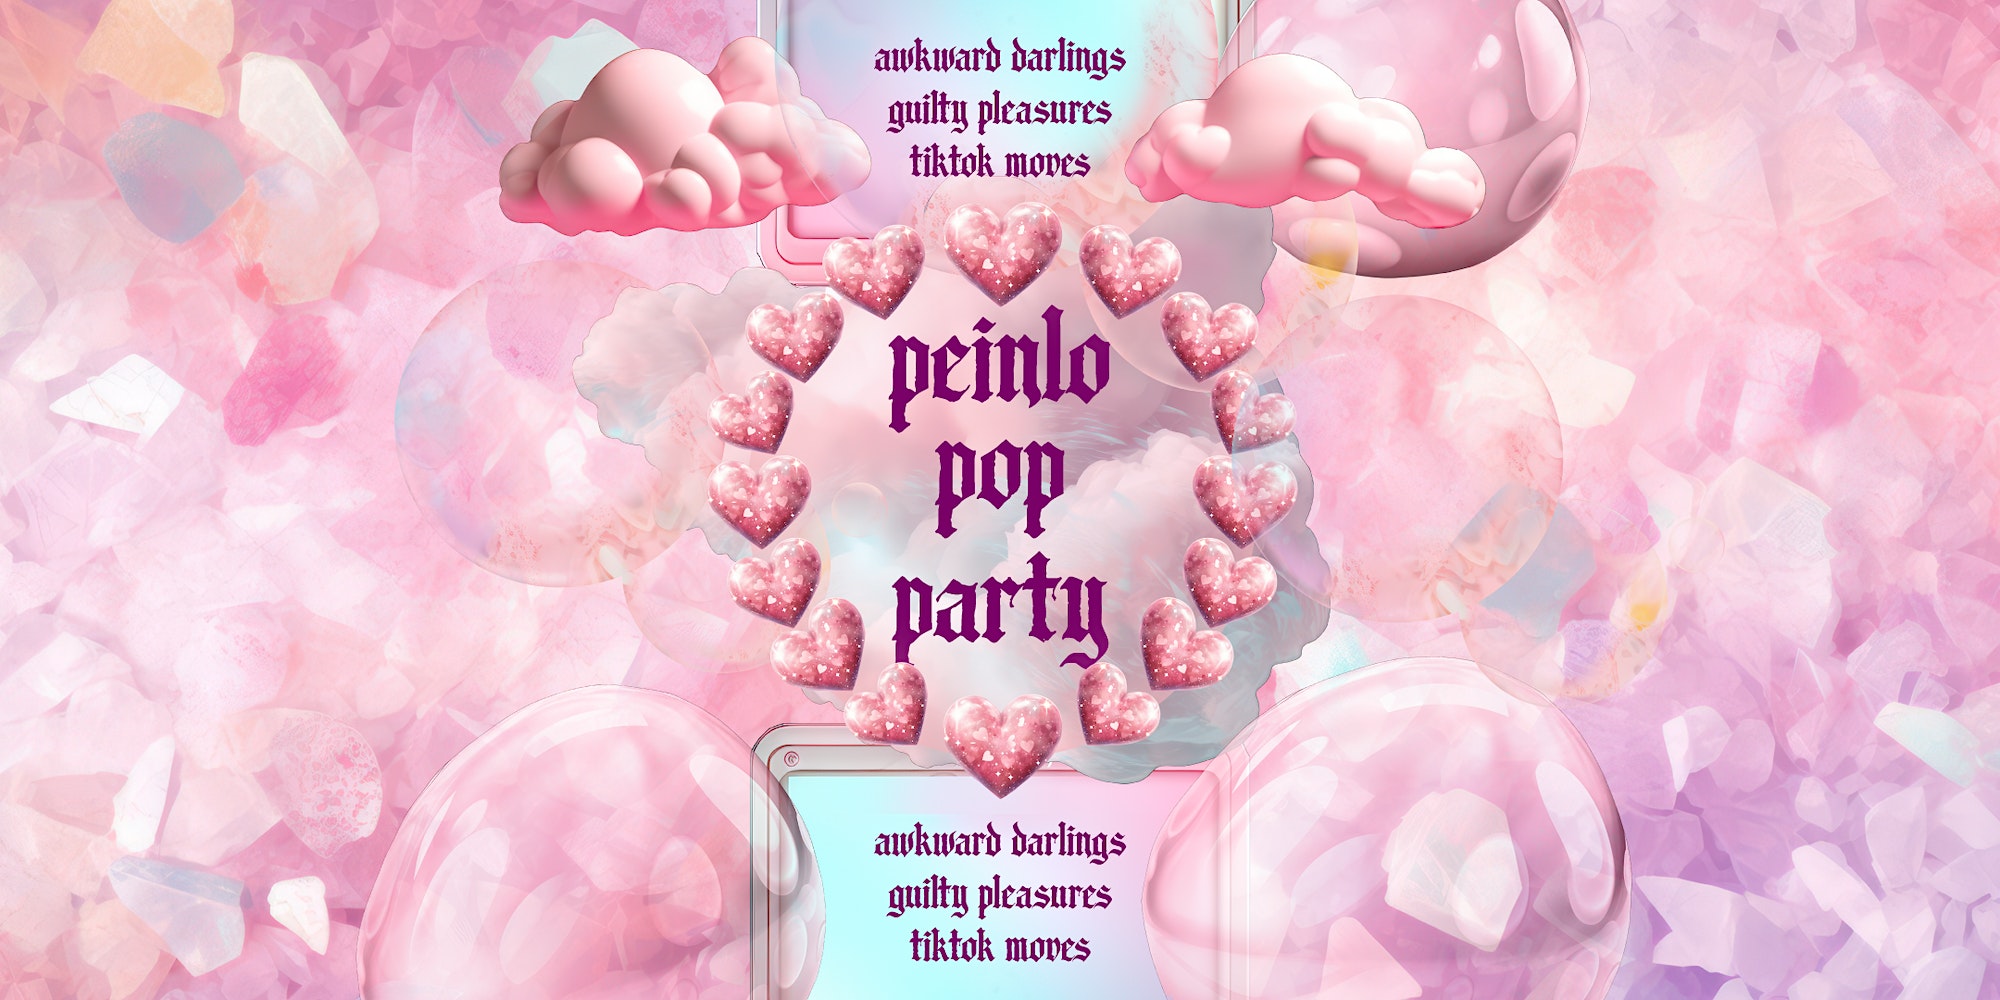 Peinlo Pop Party • Münster